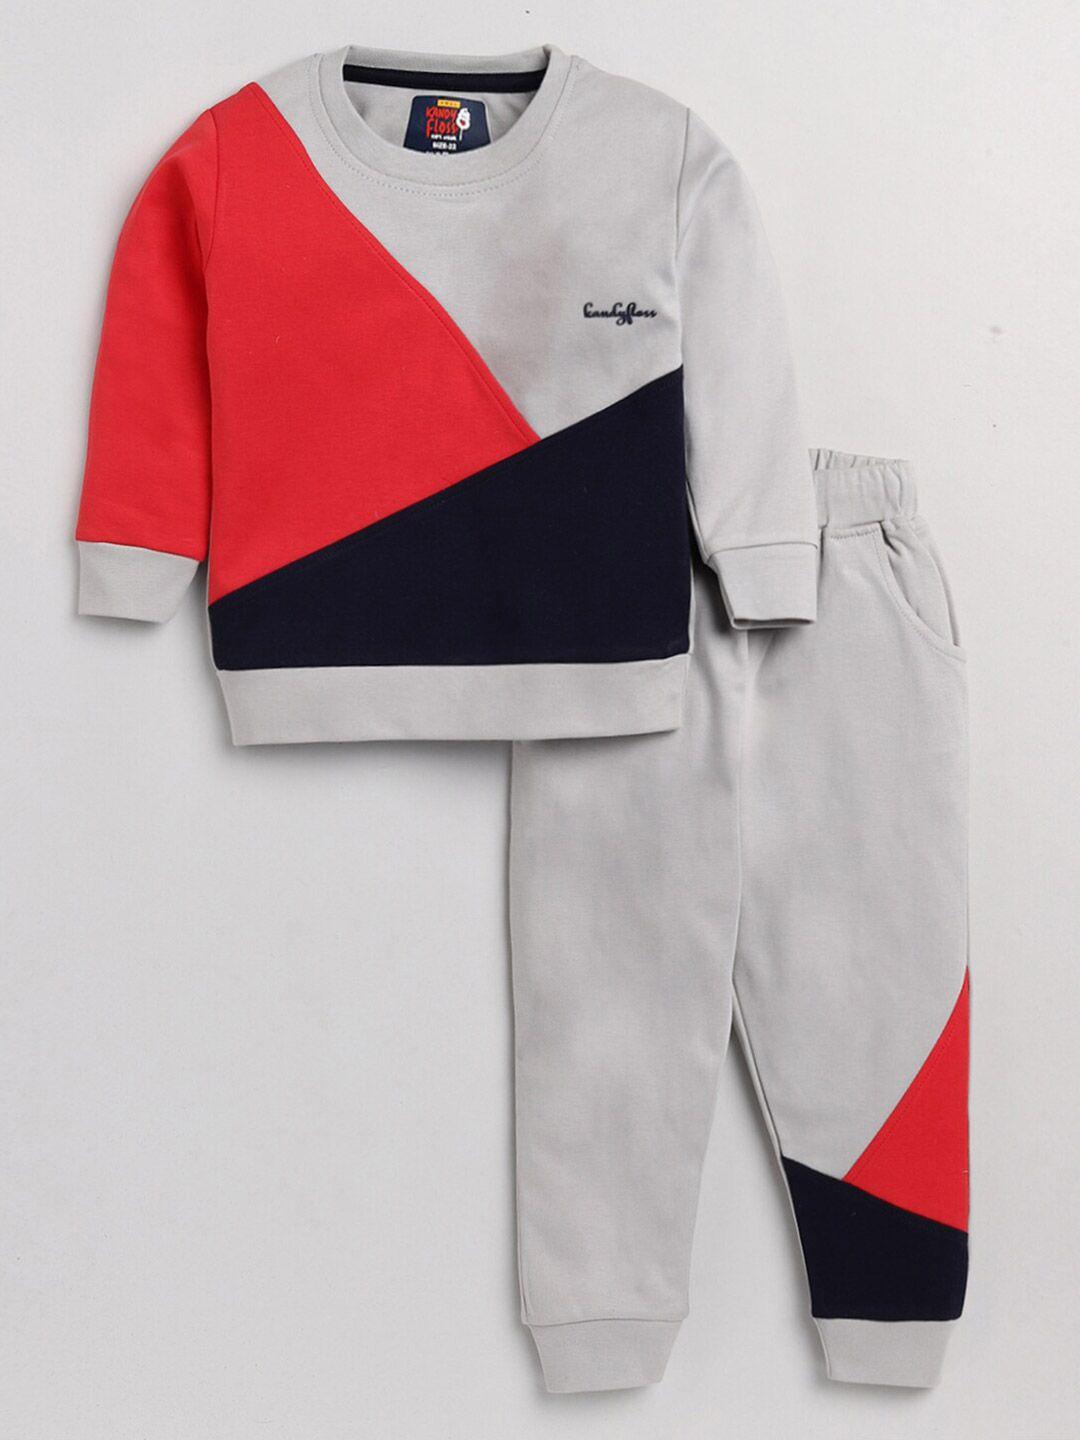 AMUL Kandyfloss Kids Grey Melange & Red Pure Cotton Colourblocked Top with Pyjamas